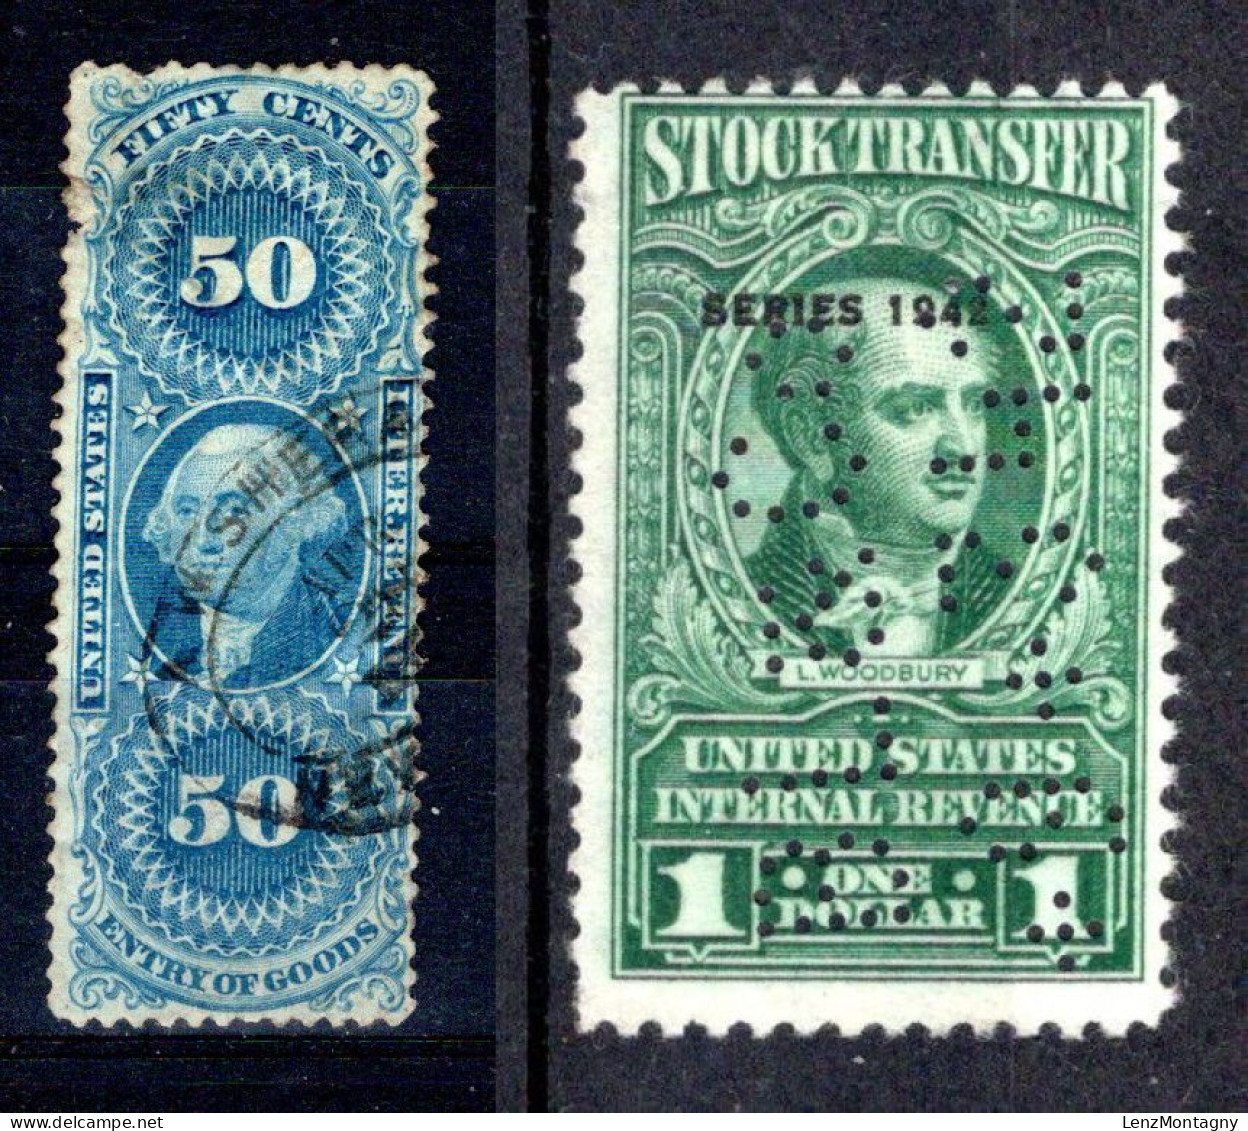 Intern Revenue 50 Cents + Stock Transfer Etats-Unis, 1 Dollar Avec Perfin, Series 1942 - Fiscal